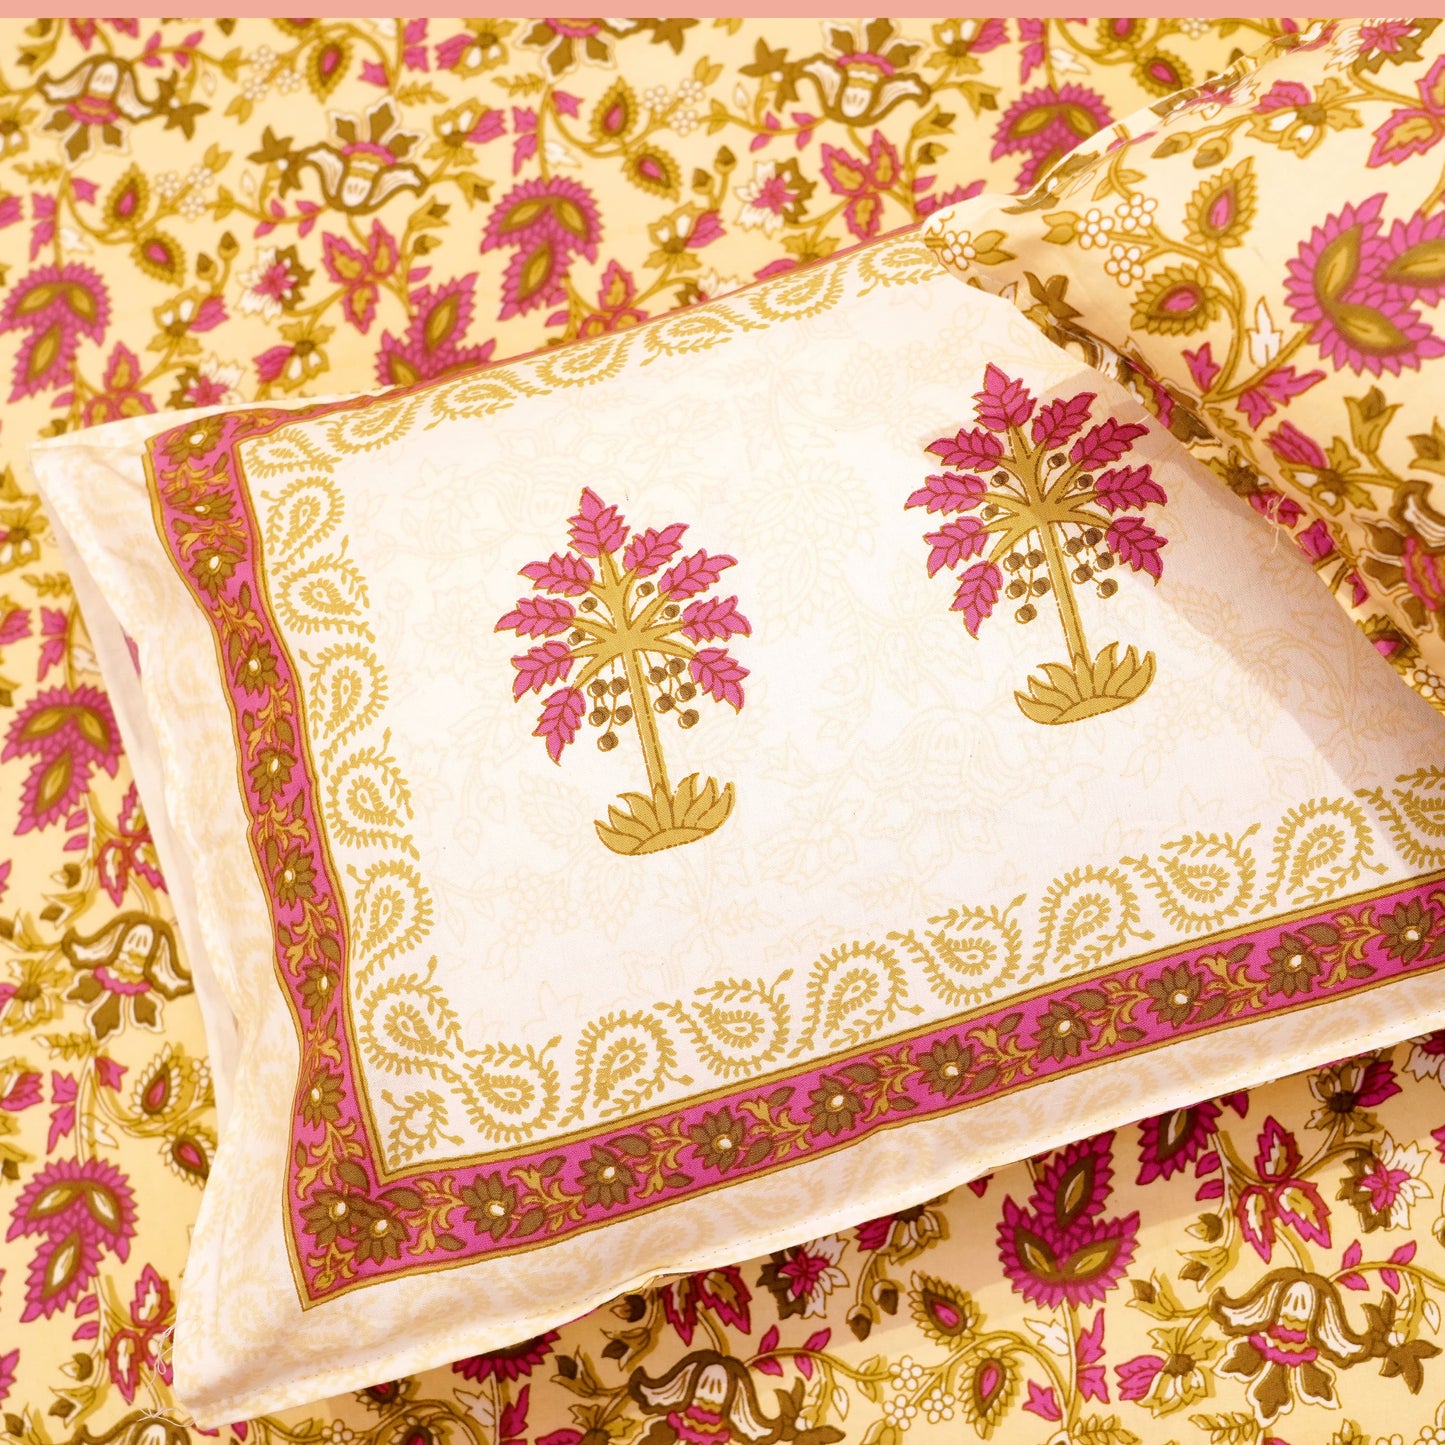 Pure Cotton Block Print Jaipuri Bedsheet - Super King Size 108*108 inches - Purple Green Floral